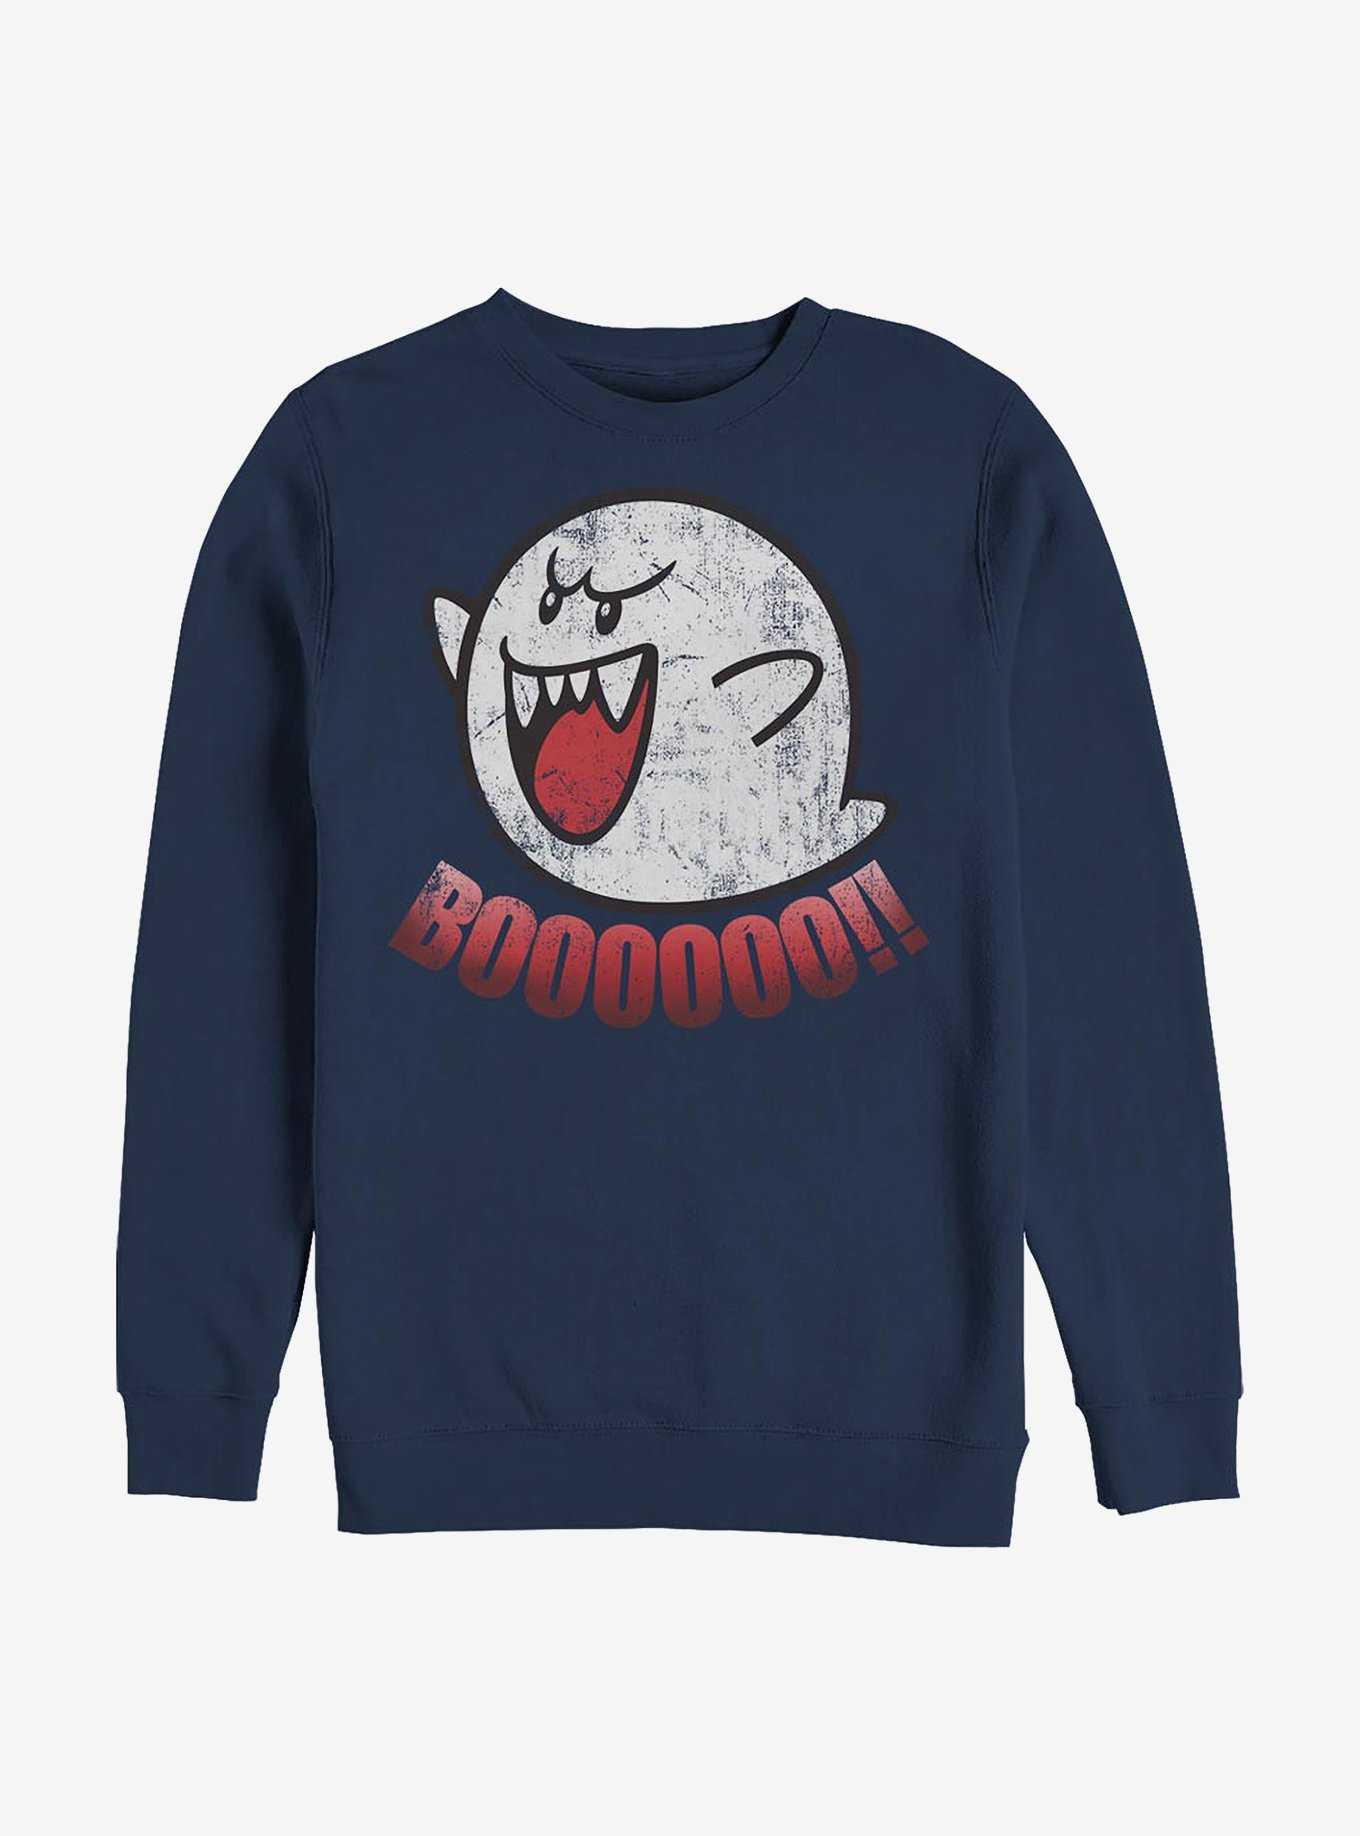 Nintendo Boo Ghost Sweatshirt, , hi-res